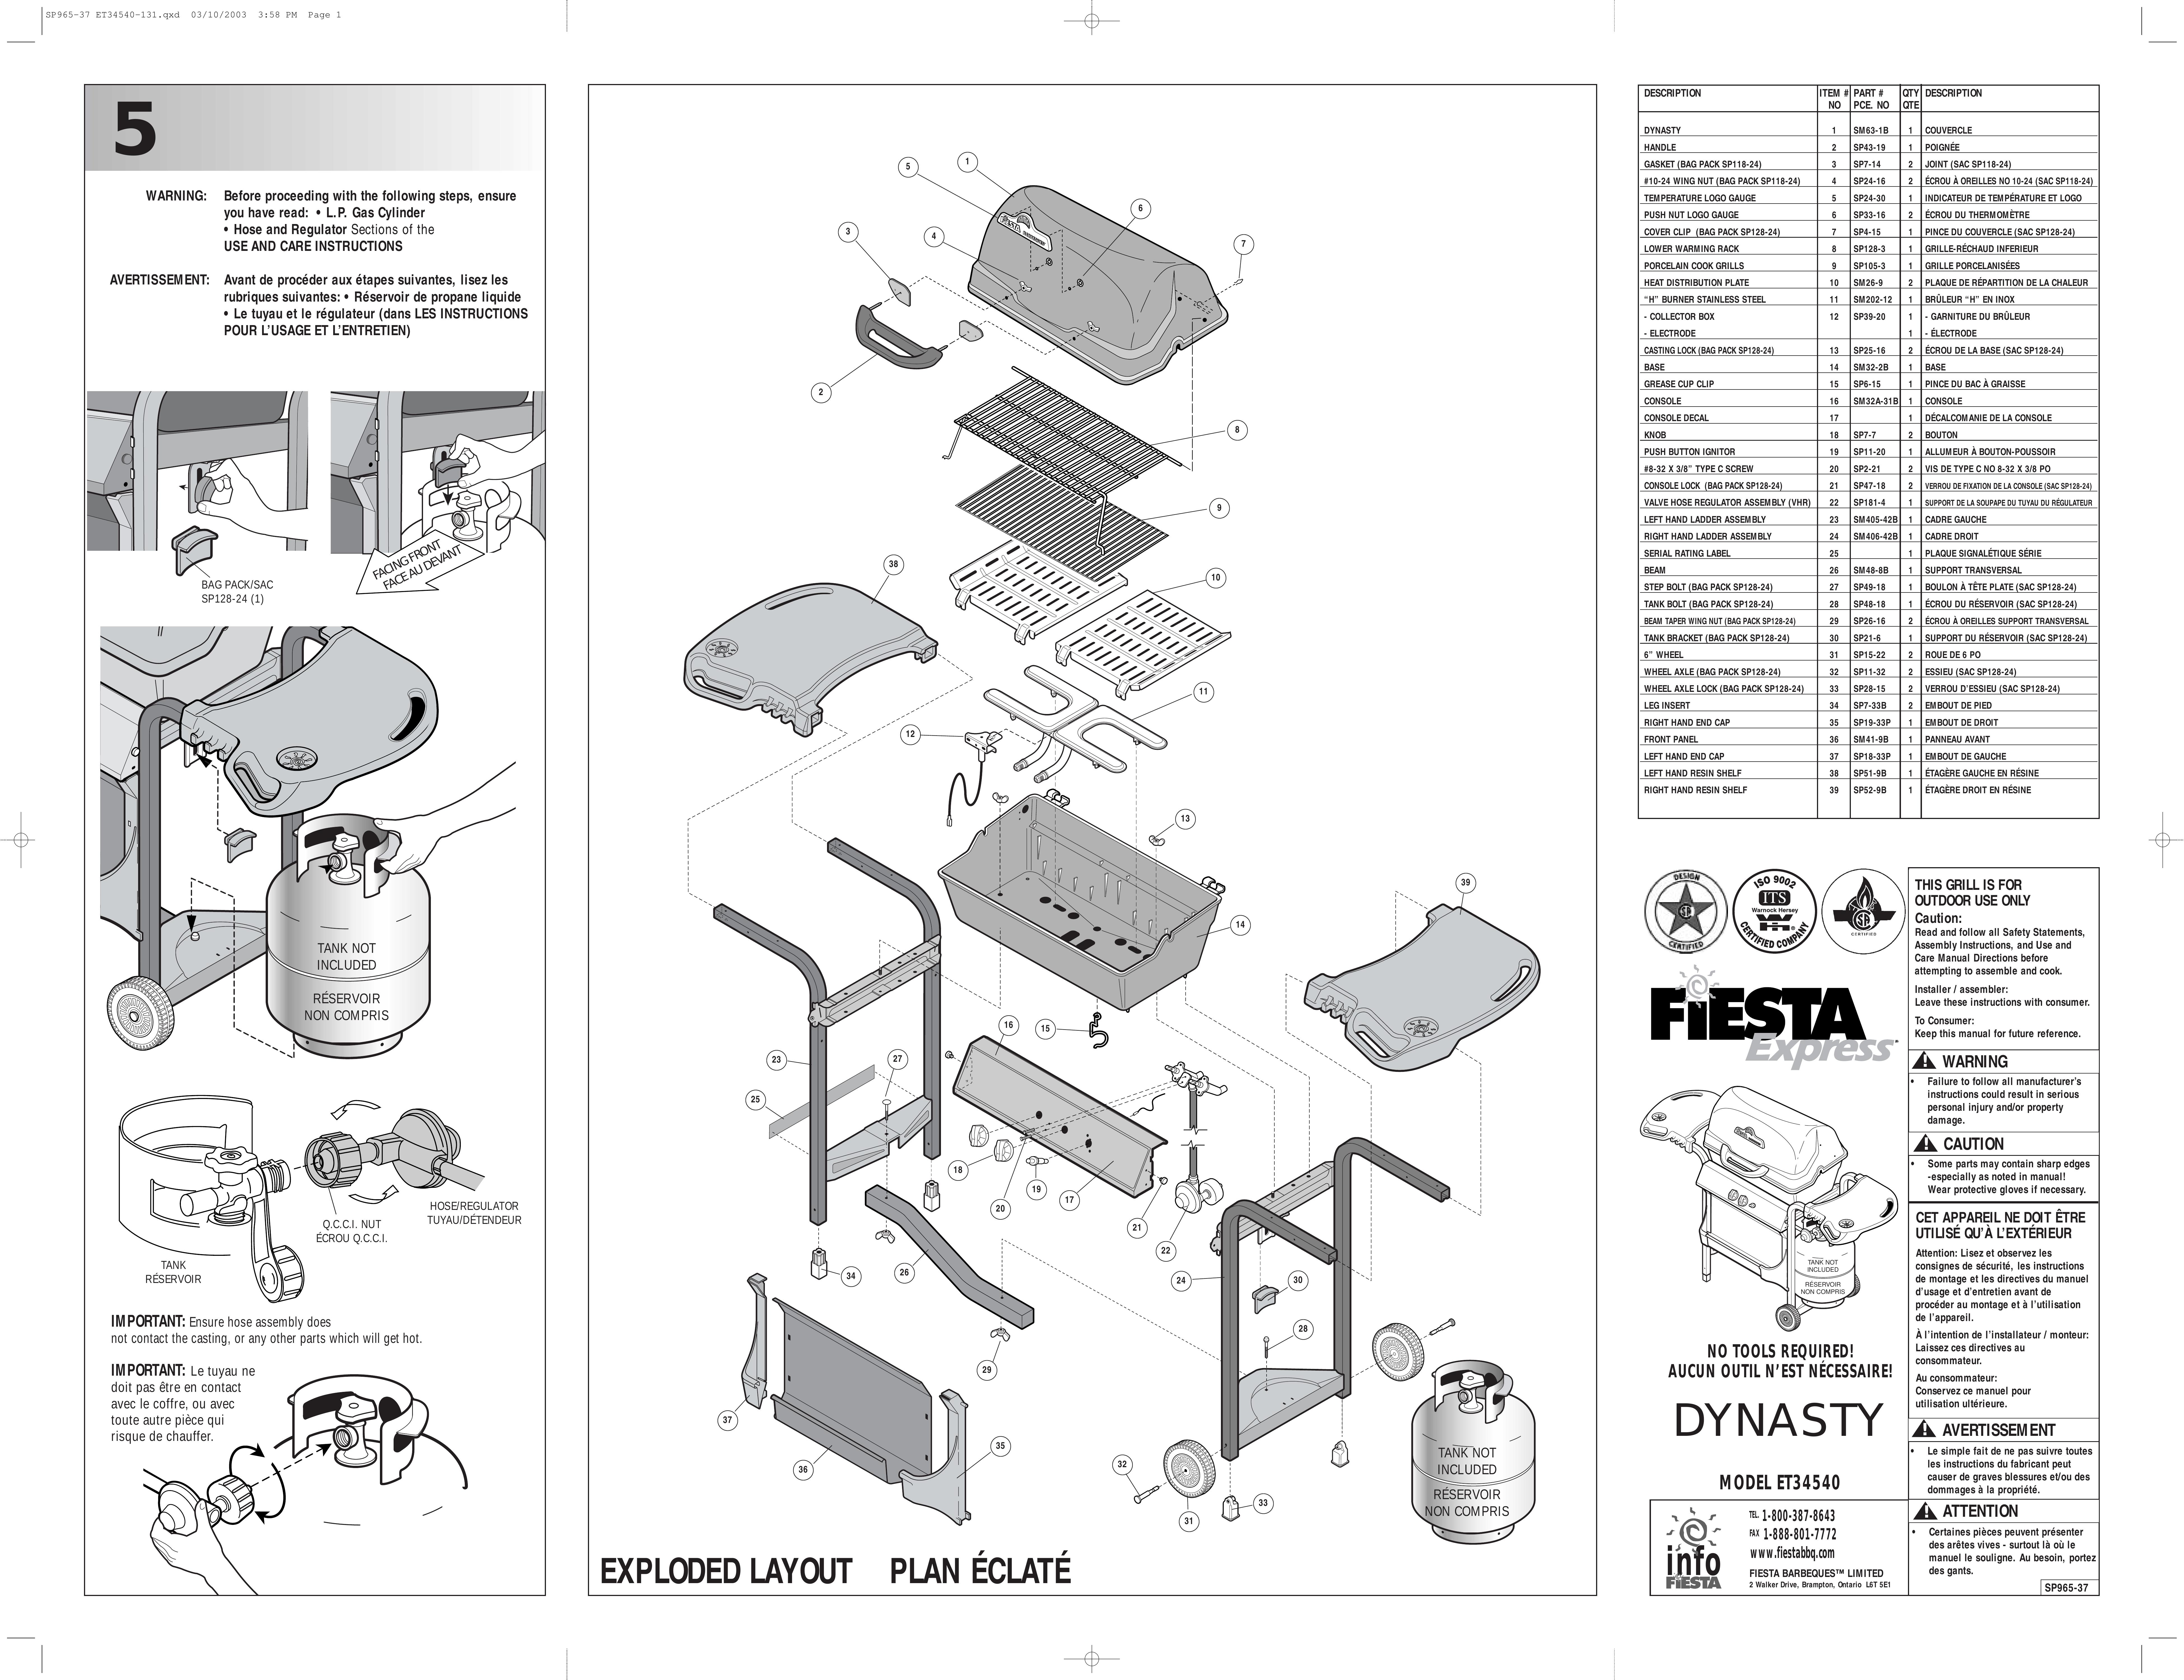 Fiesta ET34540 Gas Grill User Manual